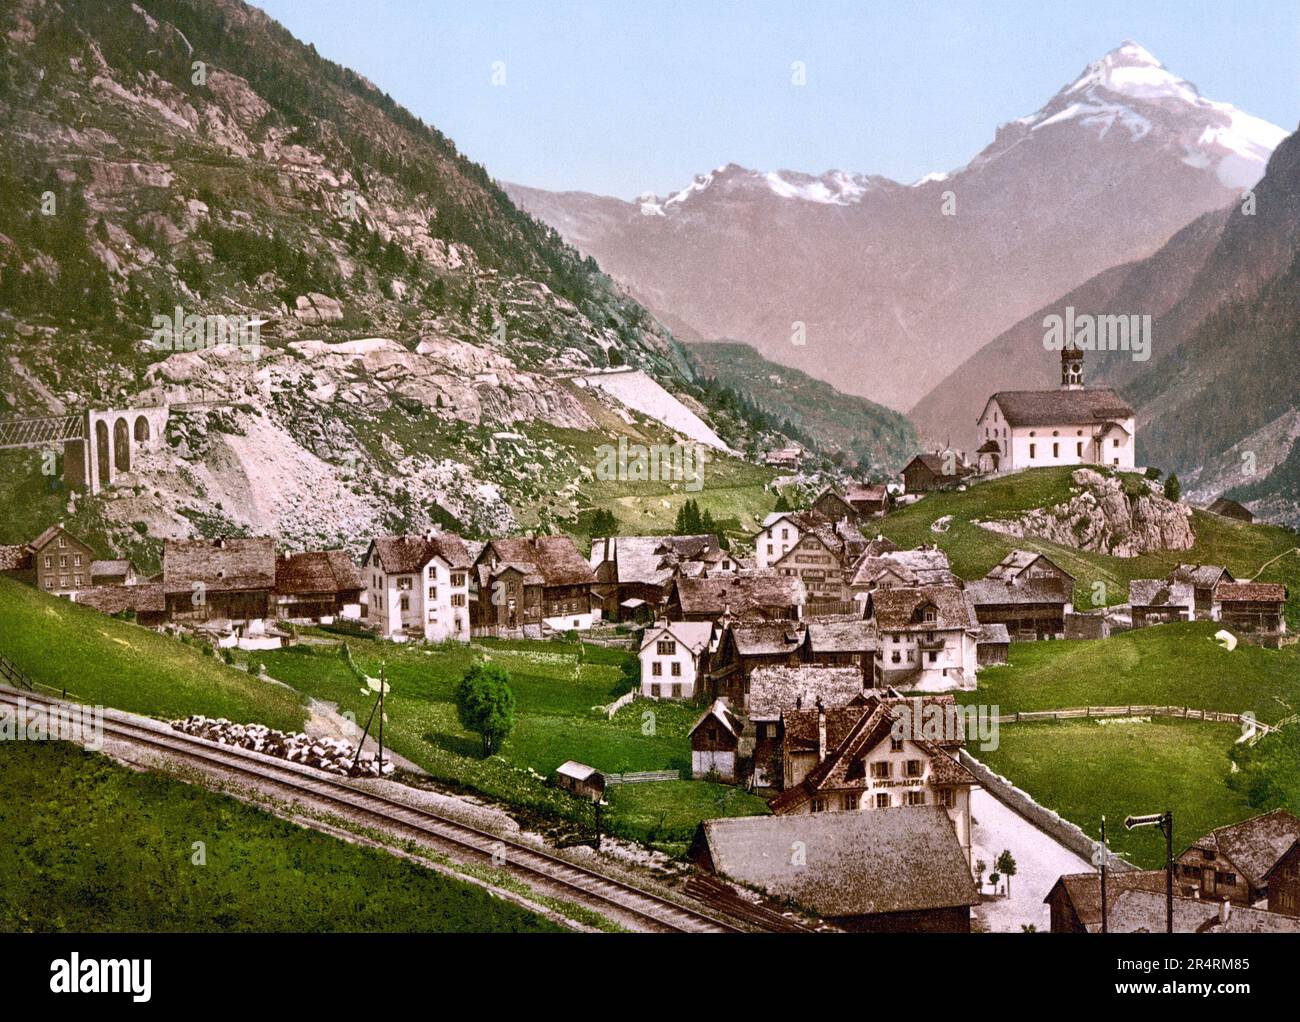 Maienreuss Bridge, St. Gotthard Railway, Wassen, Uri, Switzerland 1890. Stock Photo